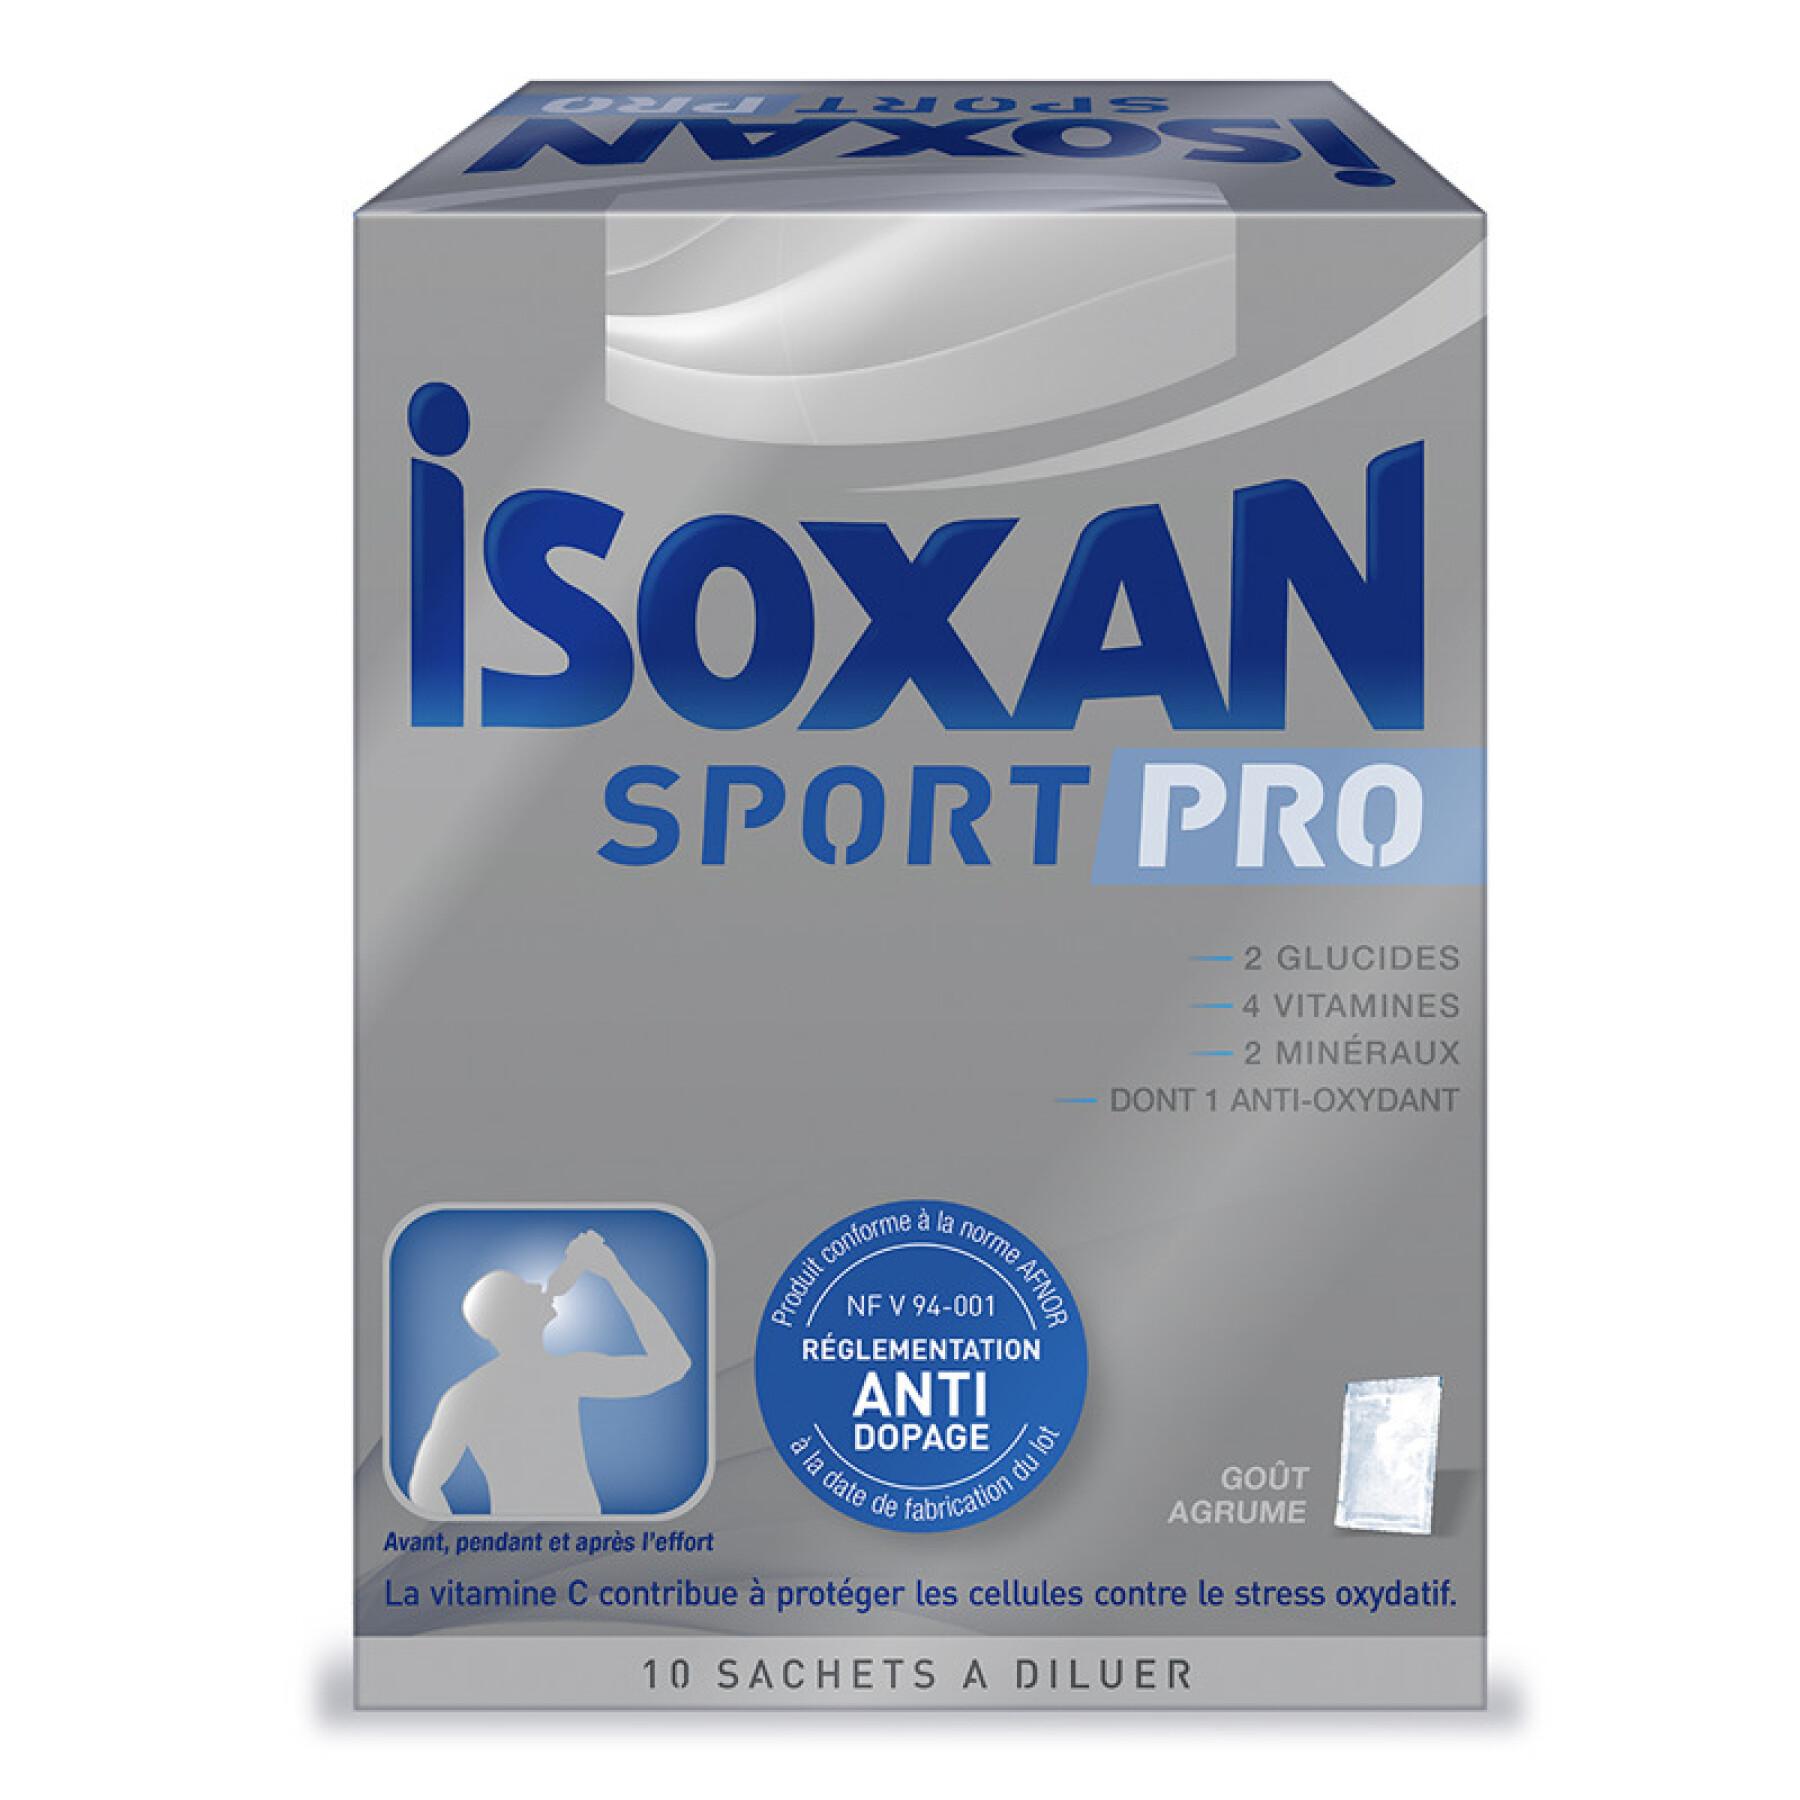 Sports food supplement Isoxan Pro